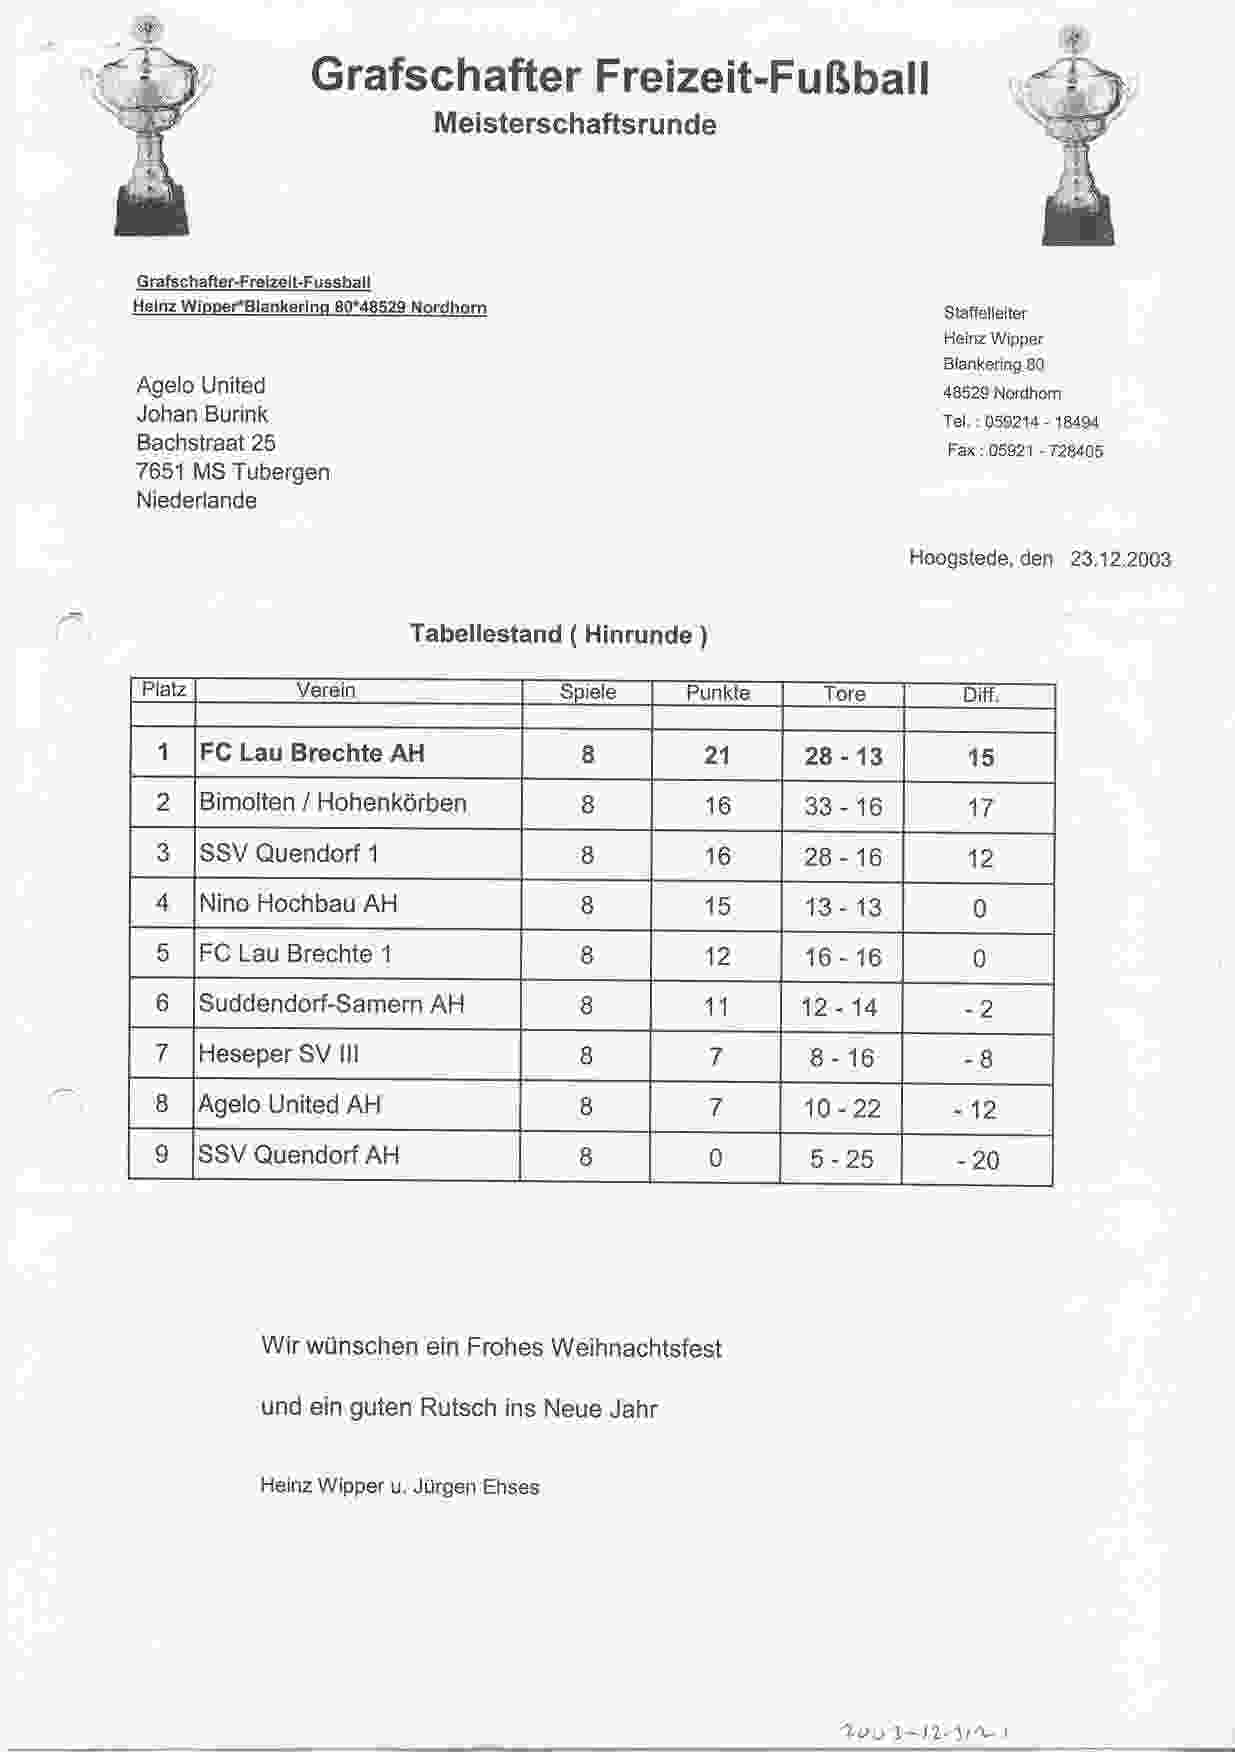 Tussenstand "Grafschafter Freizeit-Fuβball Meisterschaftsrunde" seizoen 2003/2004